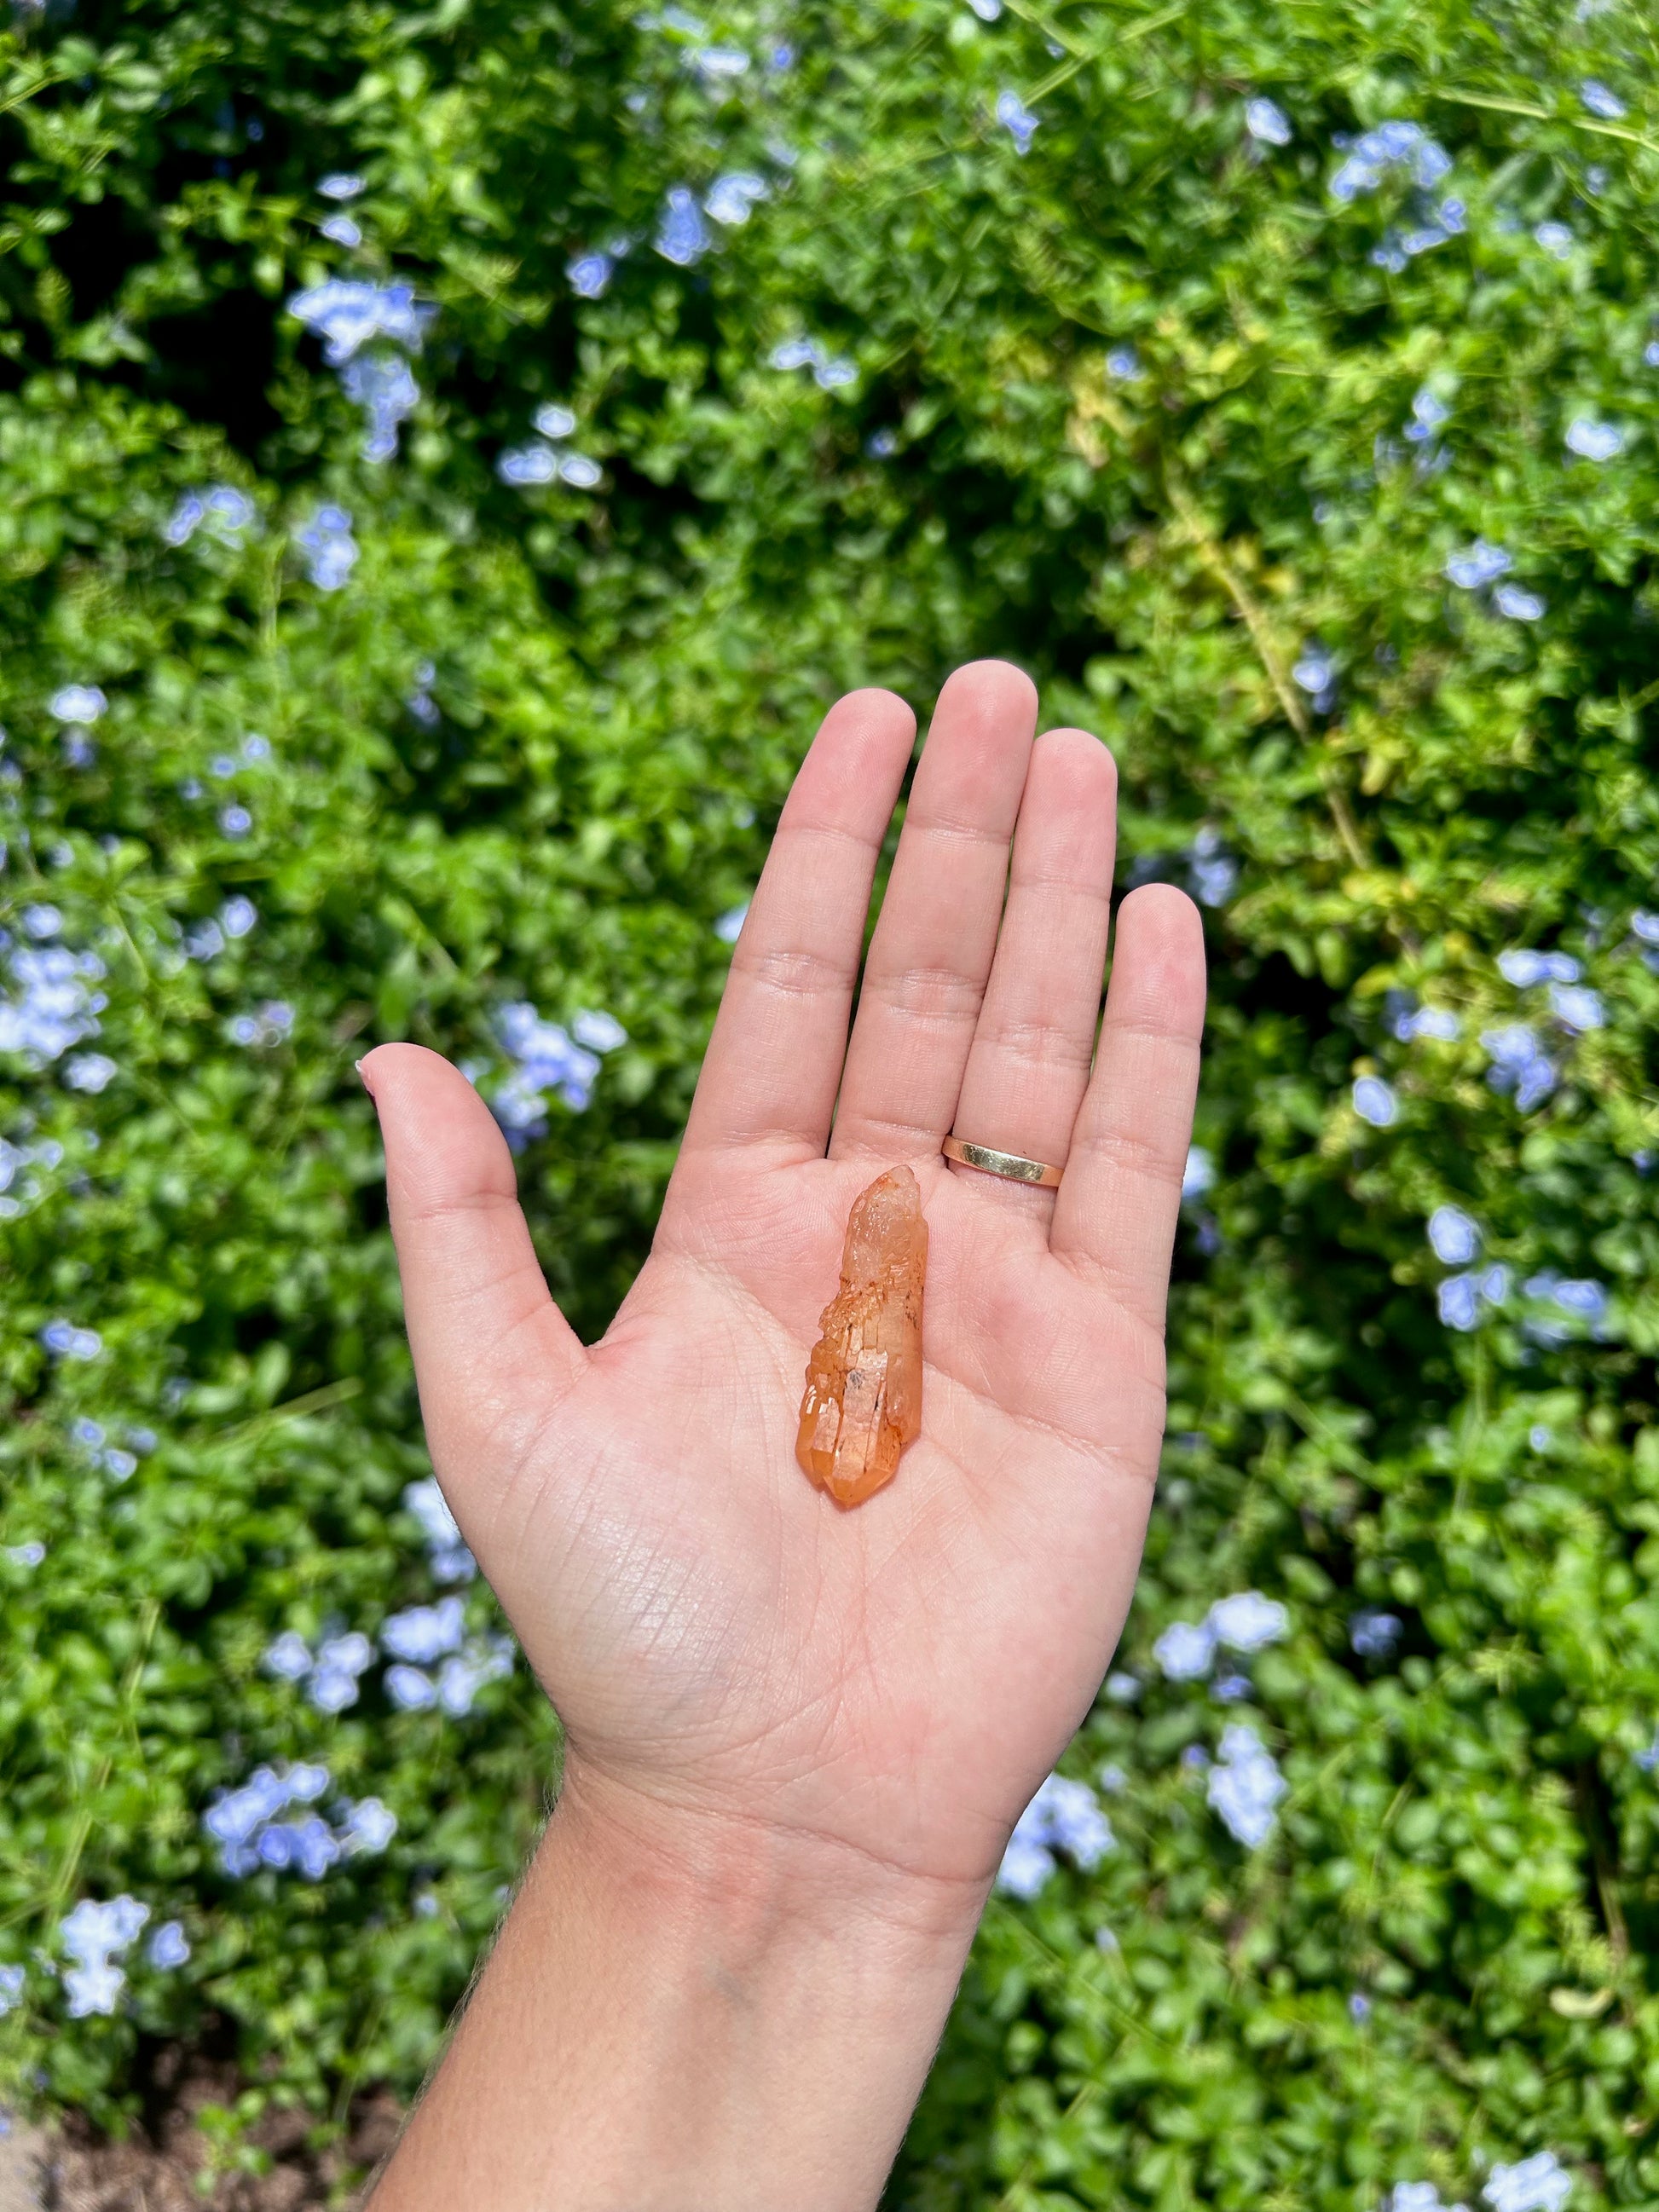 0.3 oz tangerine quartz point